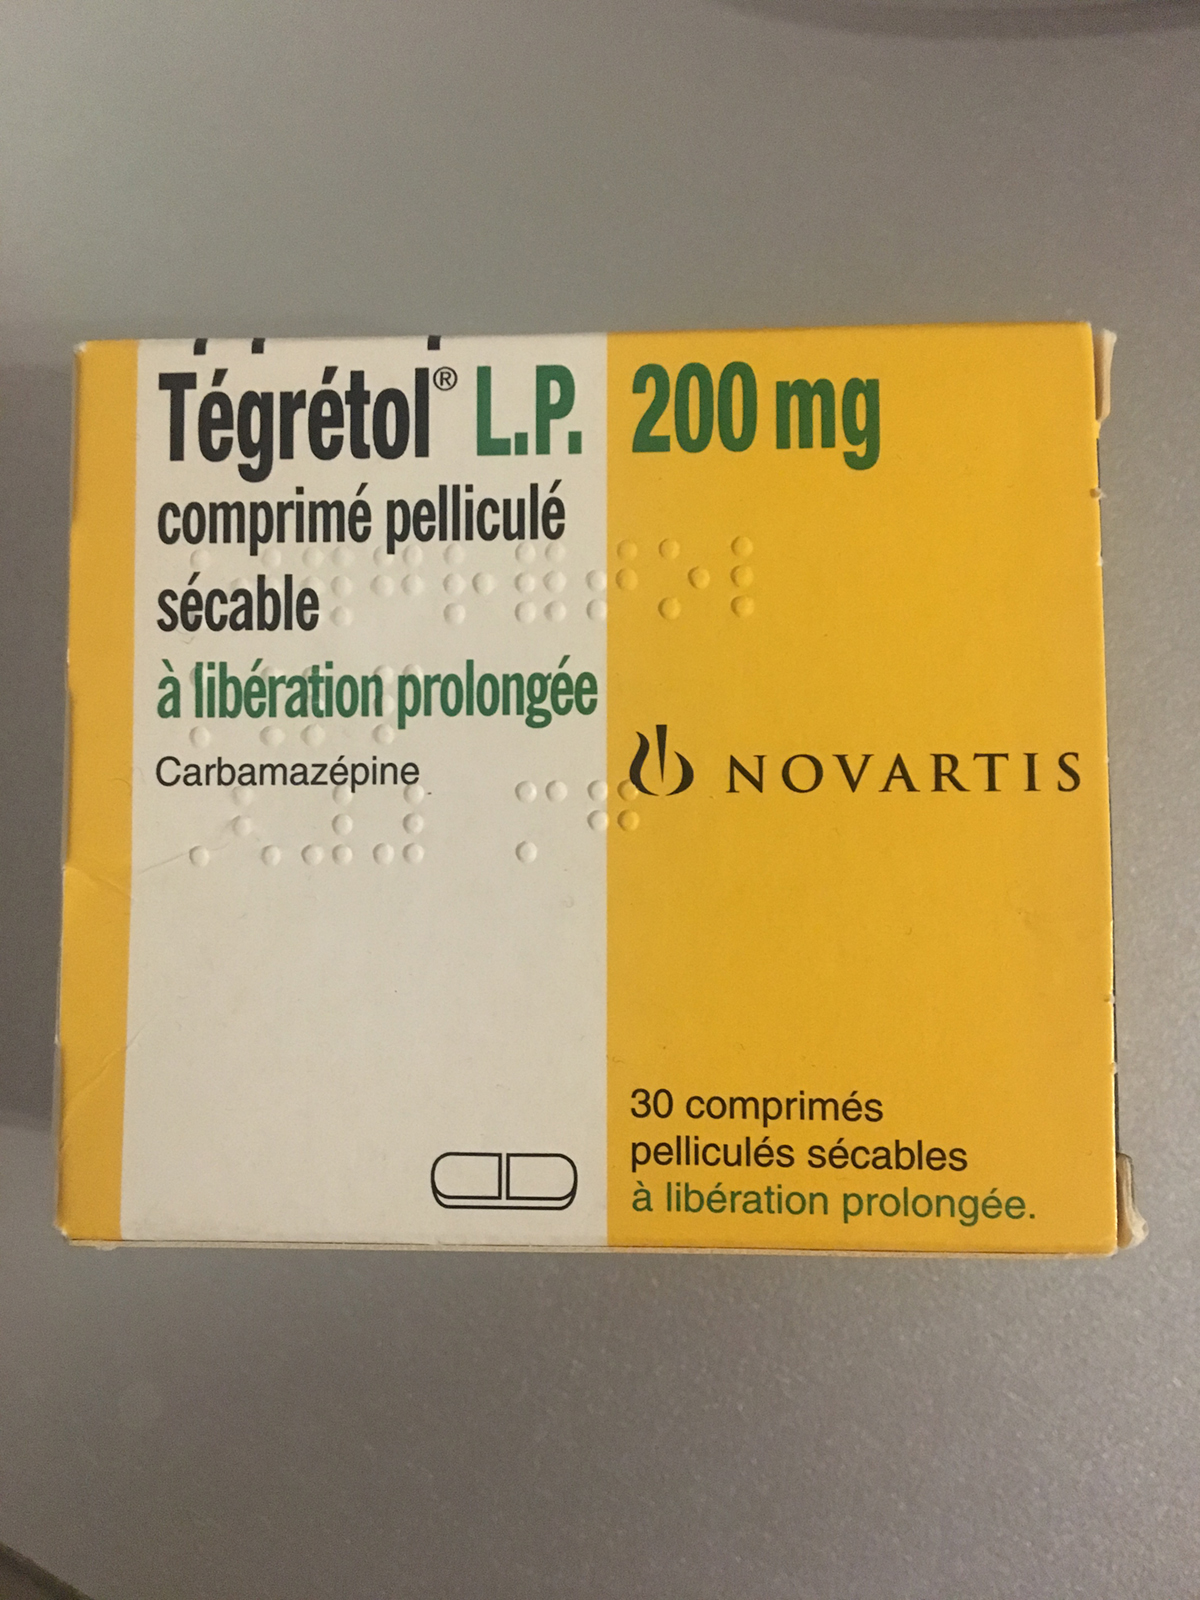 use of tegretol 200